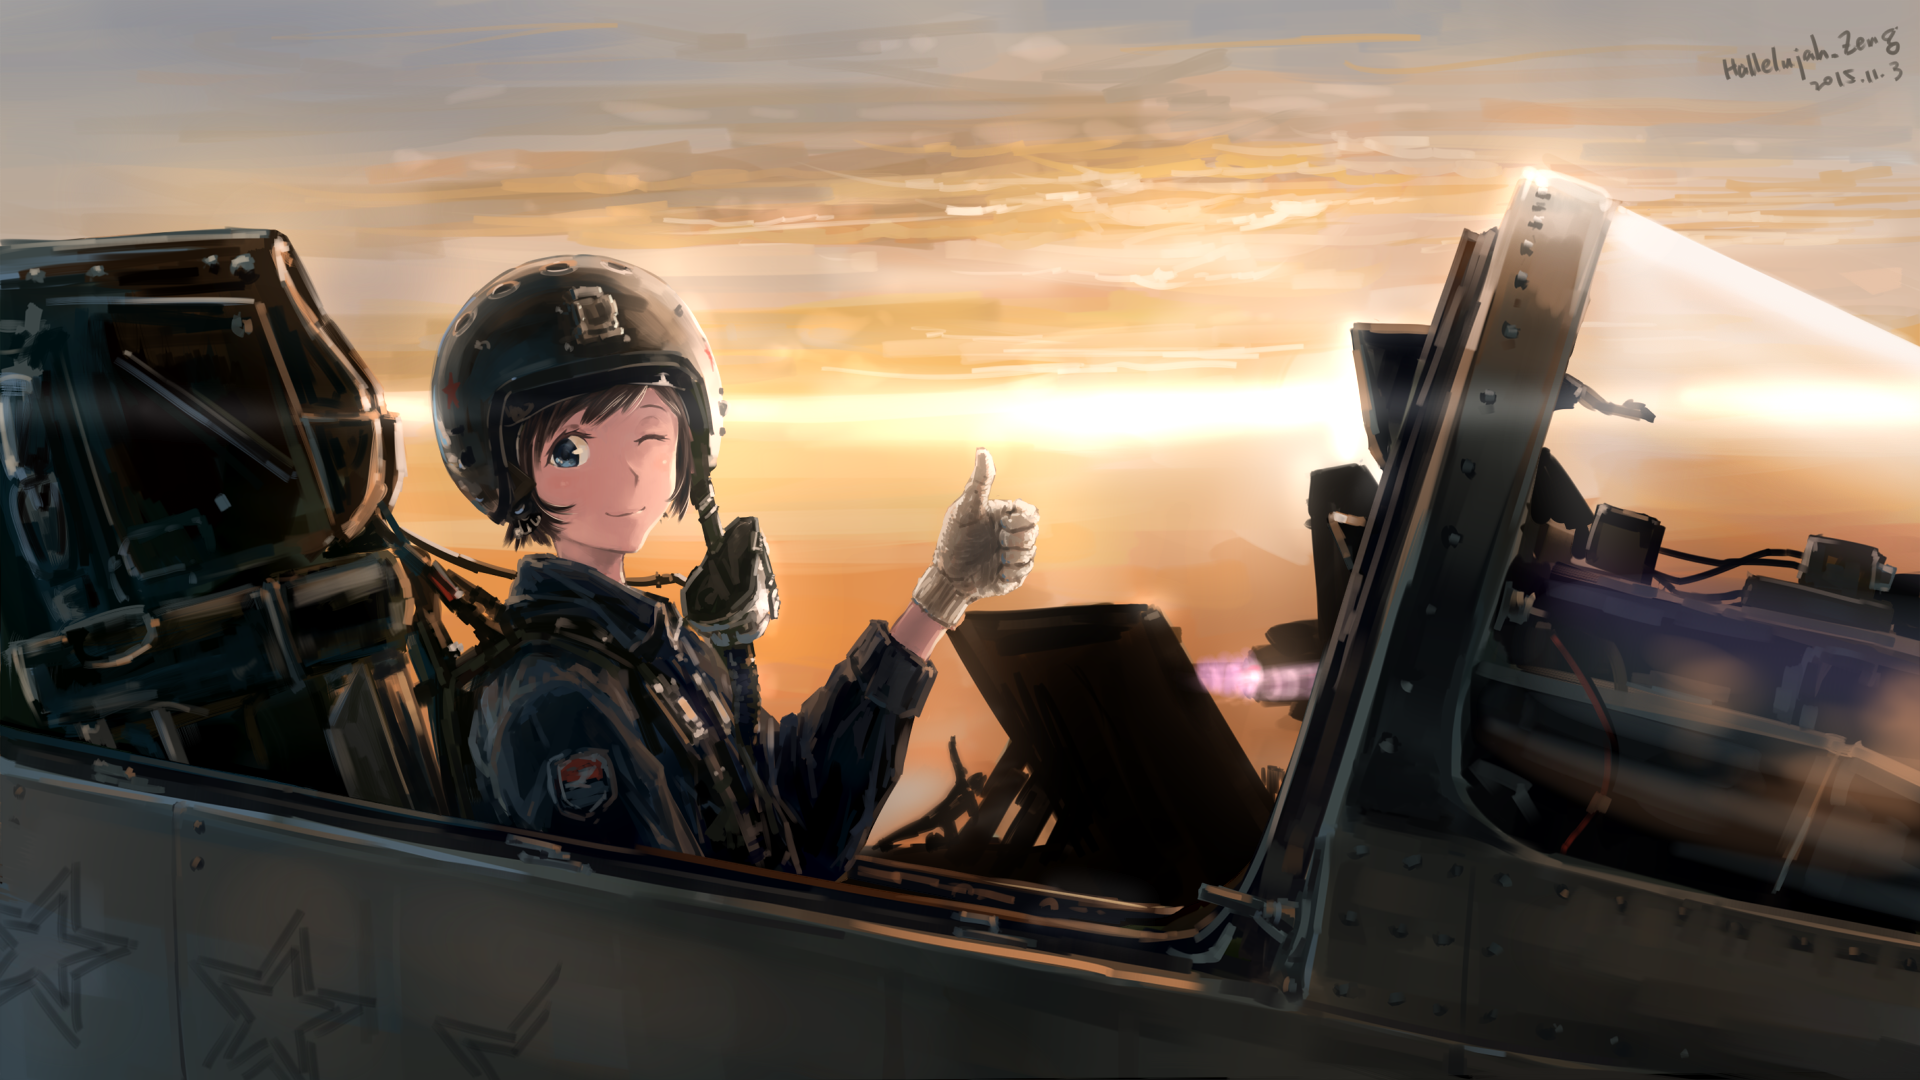 army girl wallpaper,vehicle,cg artwork,digital compositing,fighter pilot,adventure game